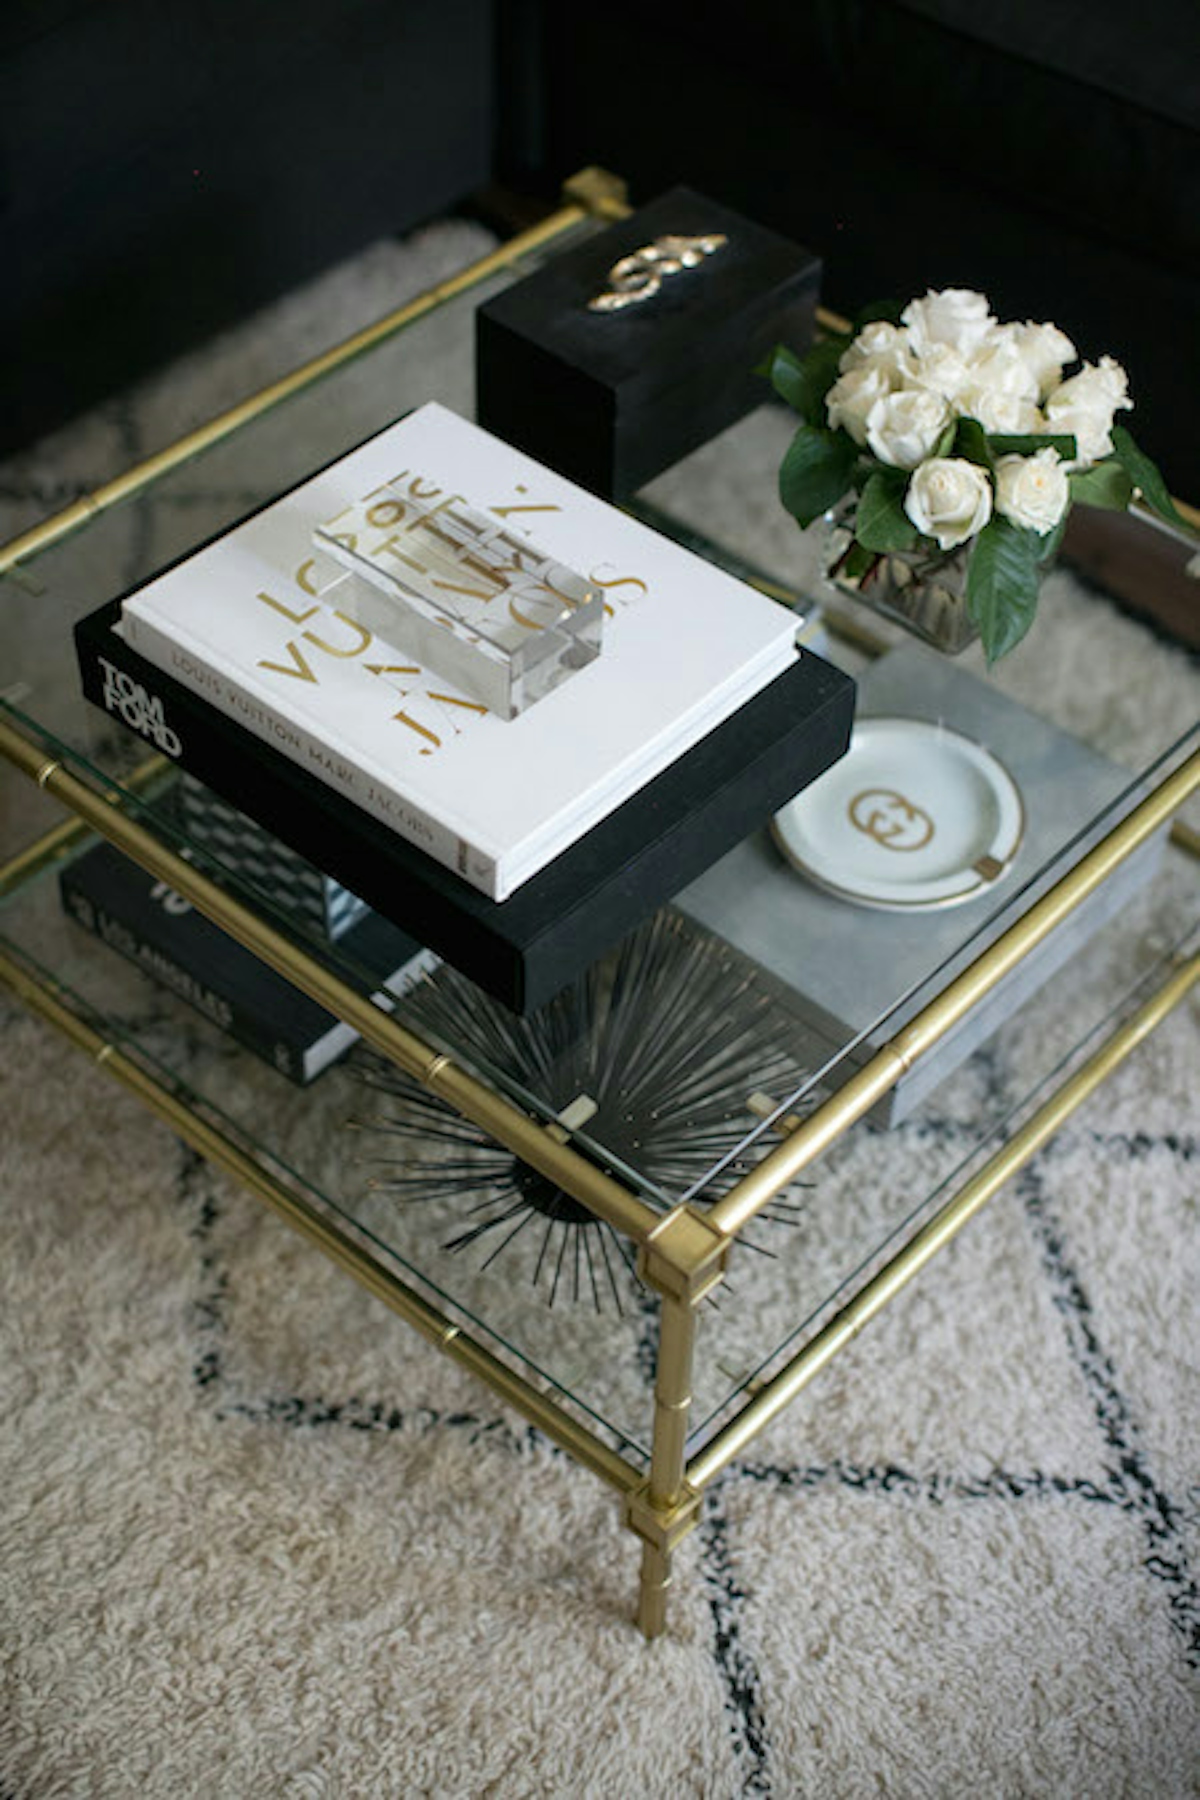 SHow to Use Books in your Home Interior – Interior Design Ideas –  LuxDeco.com